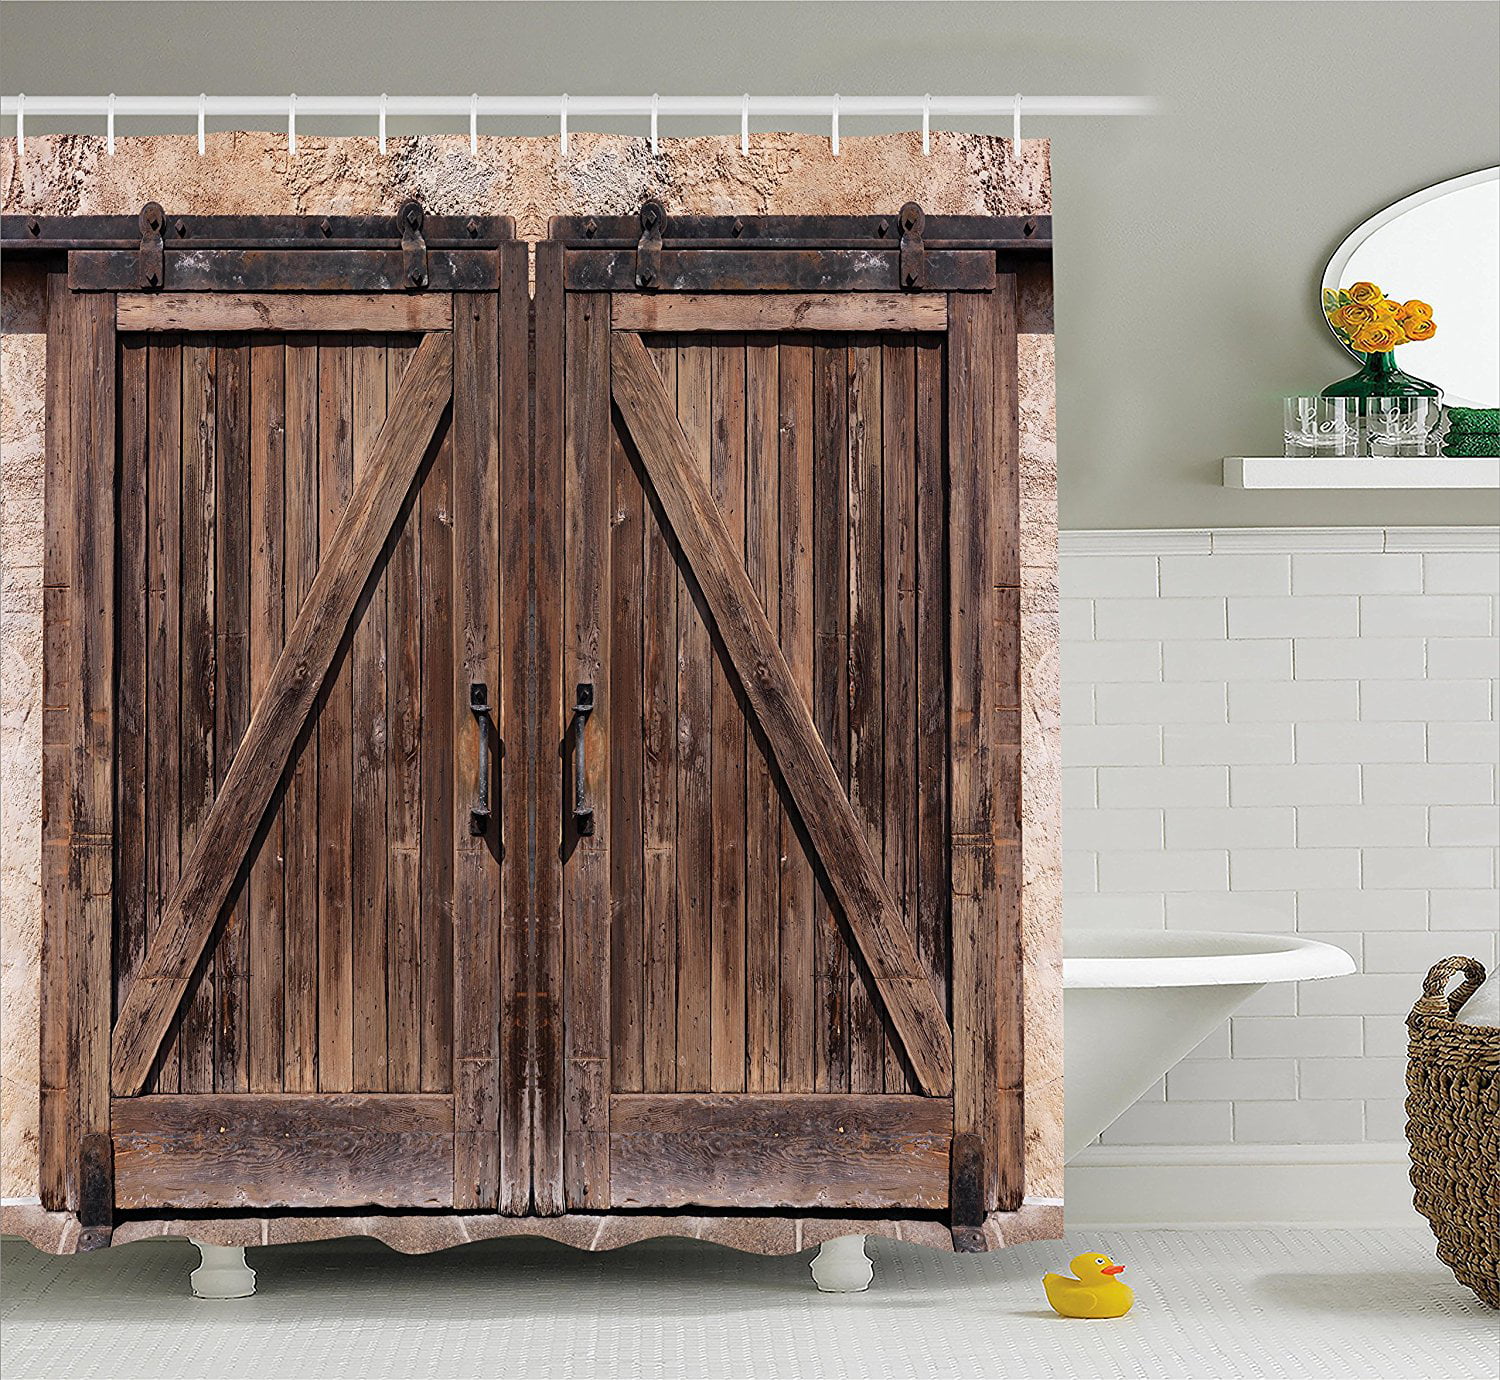 Sunflower Farm Shower Curtain Sets Rustic Wood Barn For Bathroom Decor & Hooks 